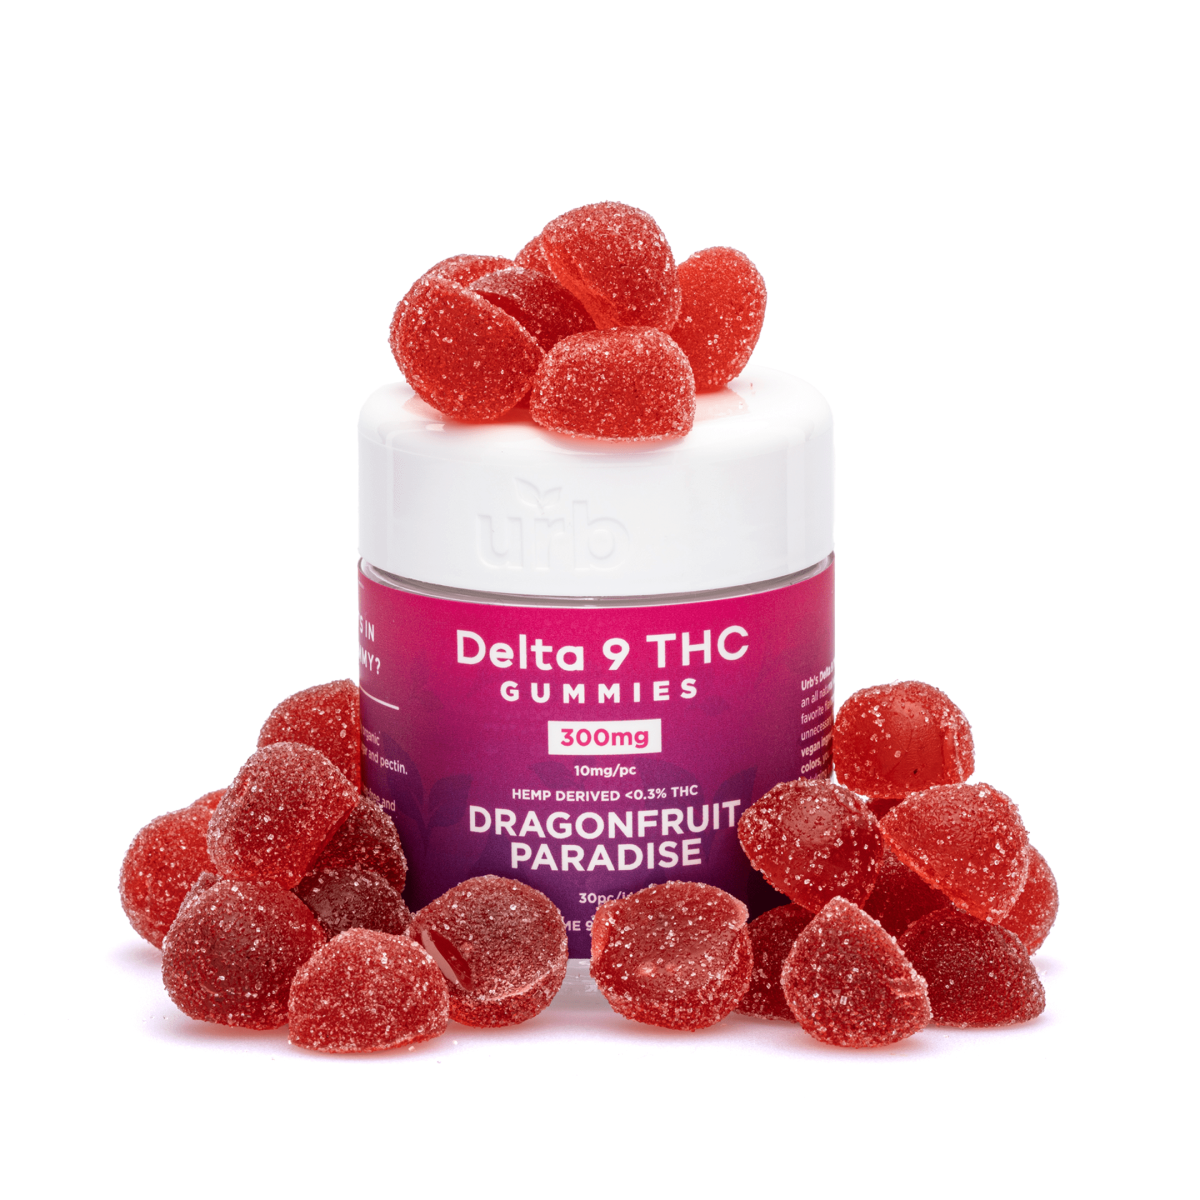 Urb-Delta-9-THC-Gummies-Dragonfruit-Paradise-300-mg-Total-Delta-9-THC-Combo